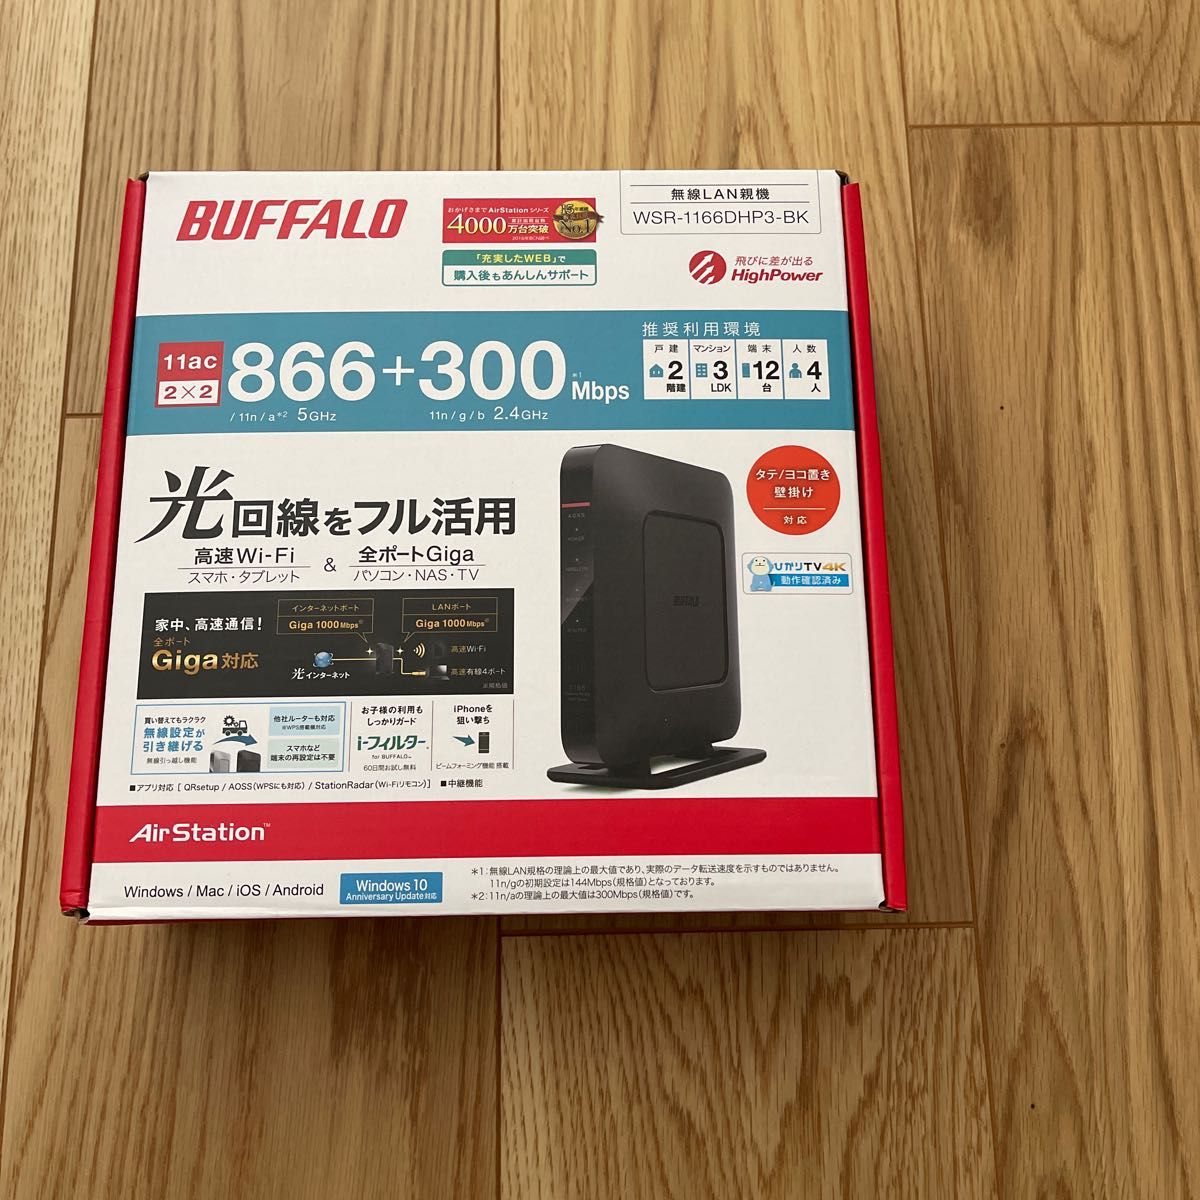 BUFFALO WiFi 無線LAN ルーター WSR-1166DHP3/MBK - PC/タブレット